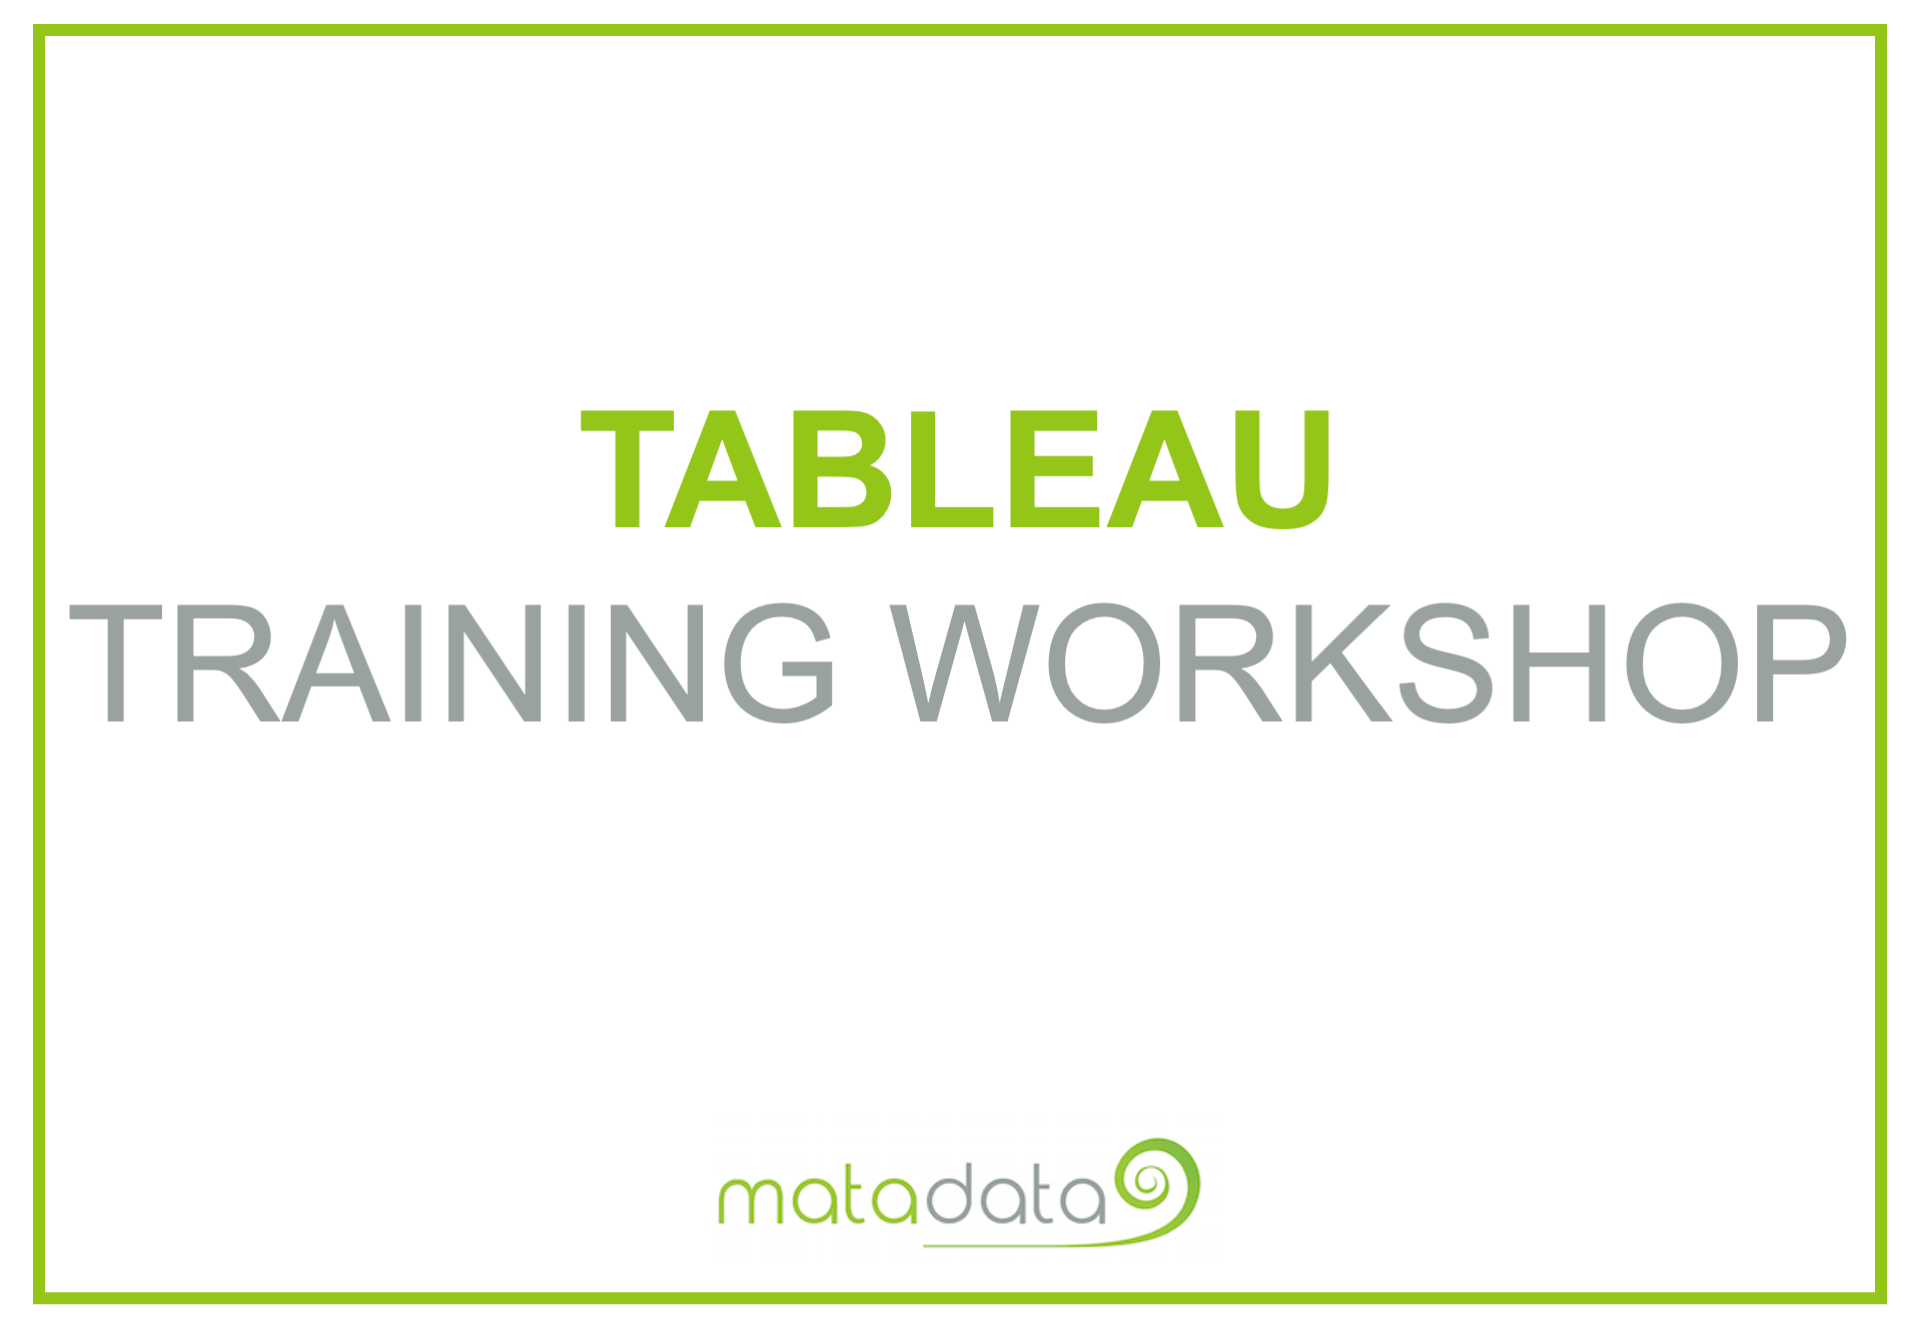 Tableau Training Workshop